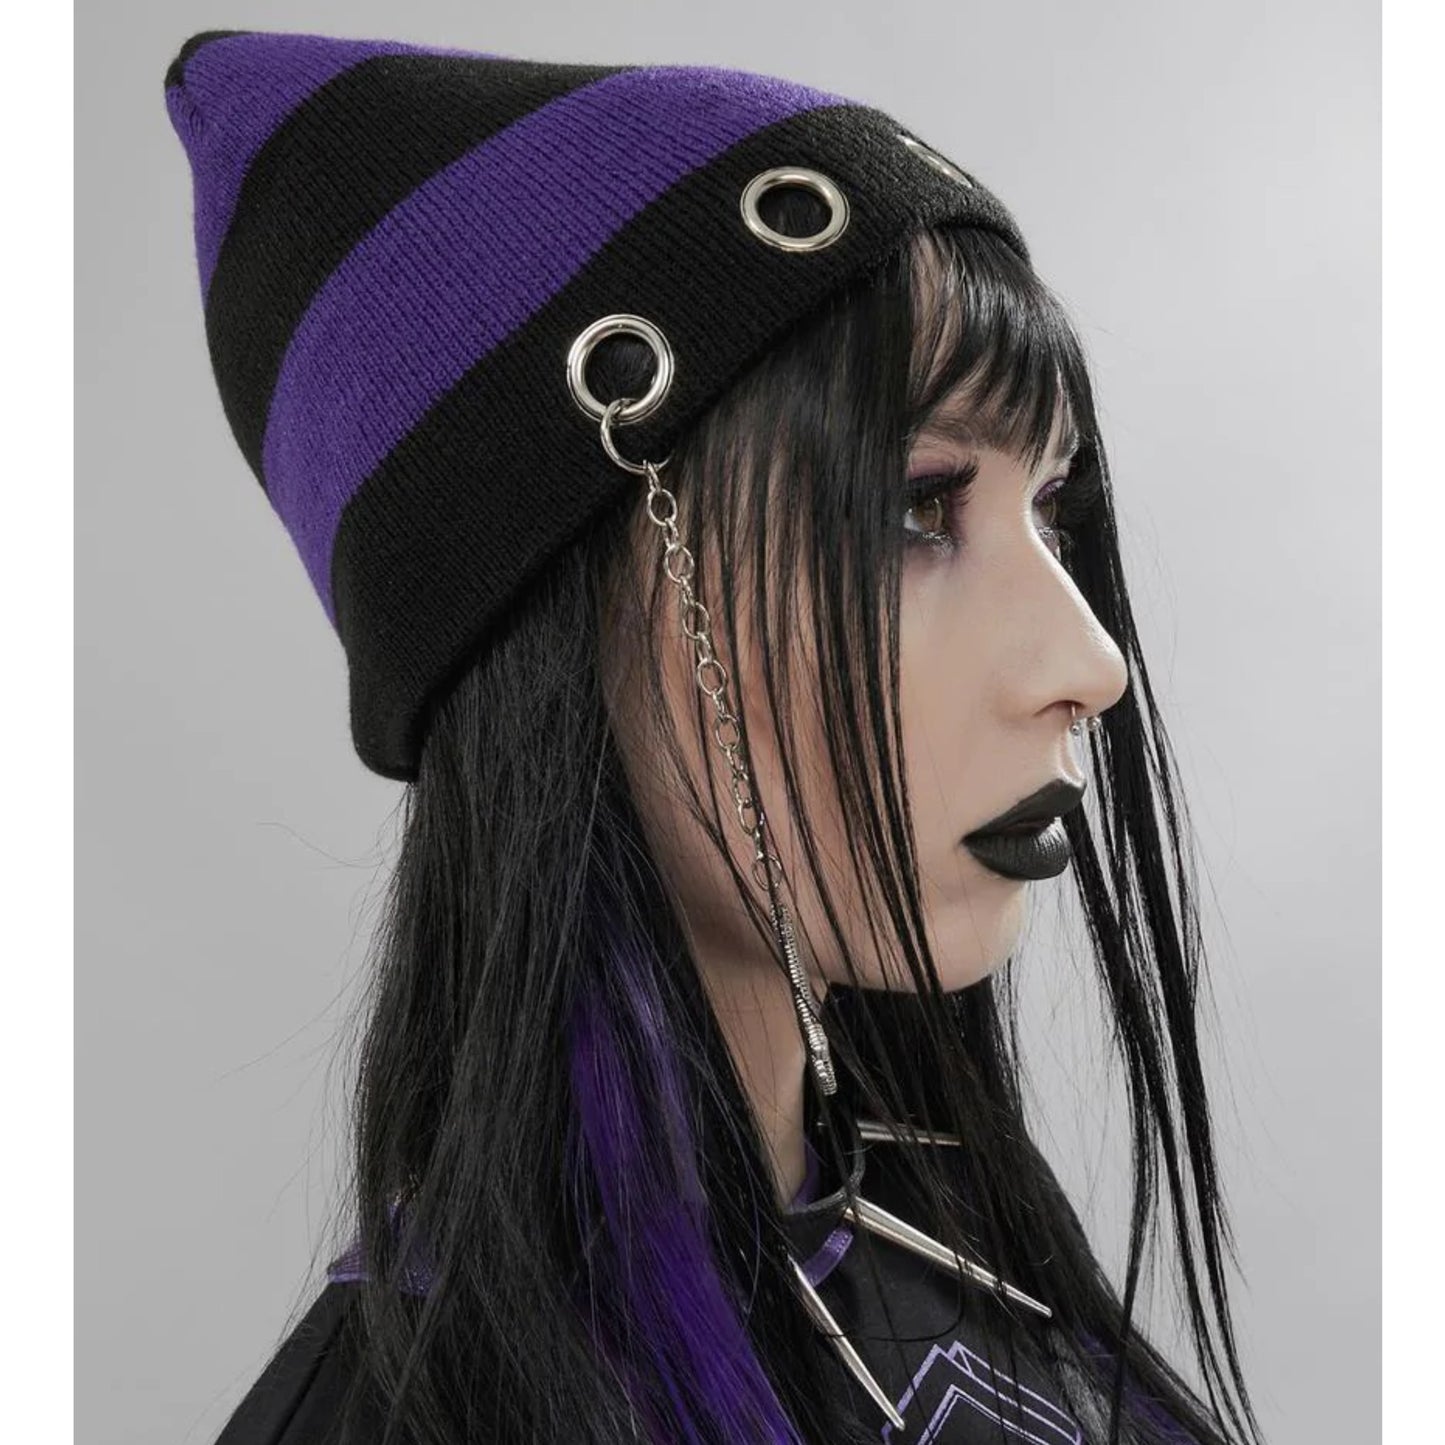 Punk Striped Beanie | Black Purple Silver Eyelets With Chain Strap - Widow - Beanies